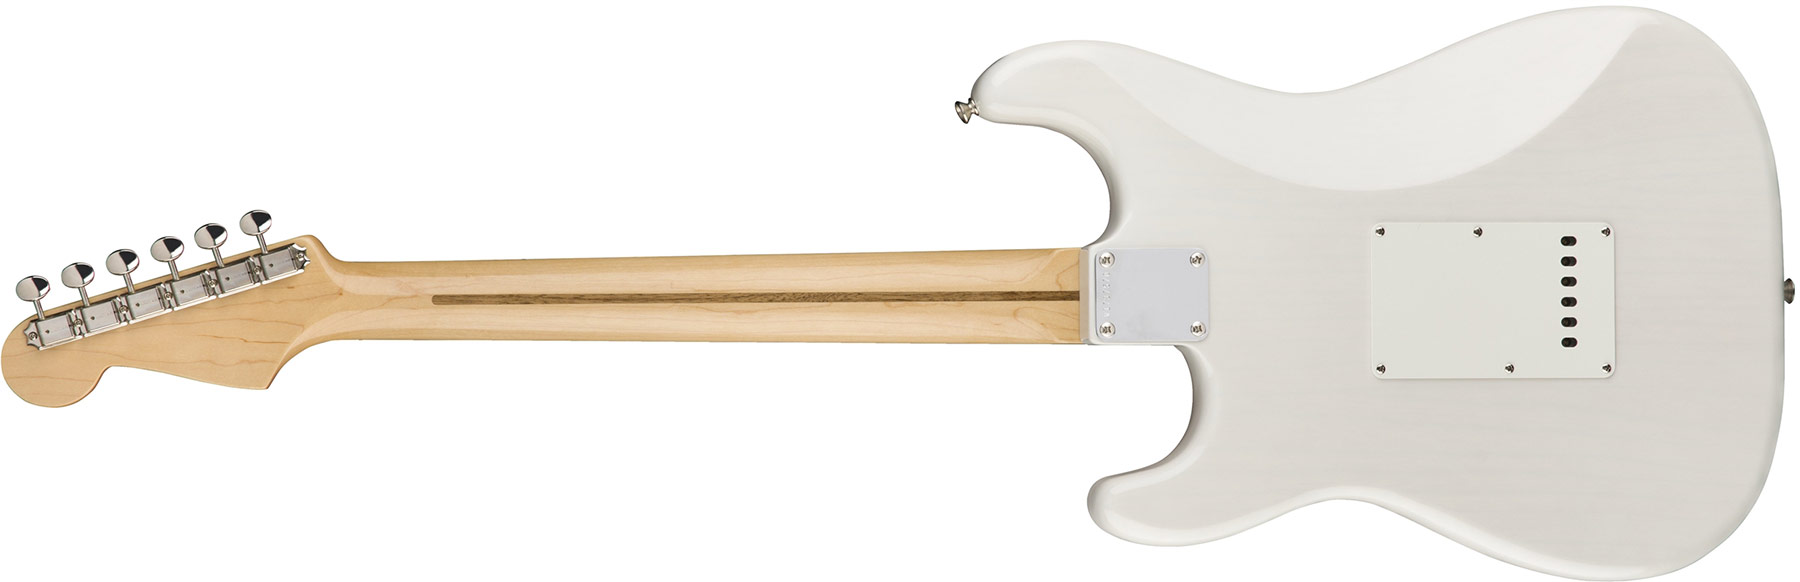 Fender Strat '50s American Original Usa Sss Mn - White Blonde - E-Gitarre in Str-Form - Variation 2